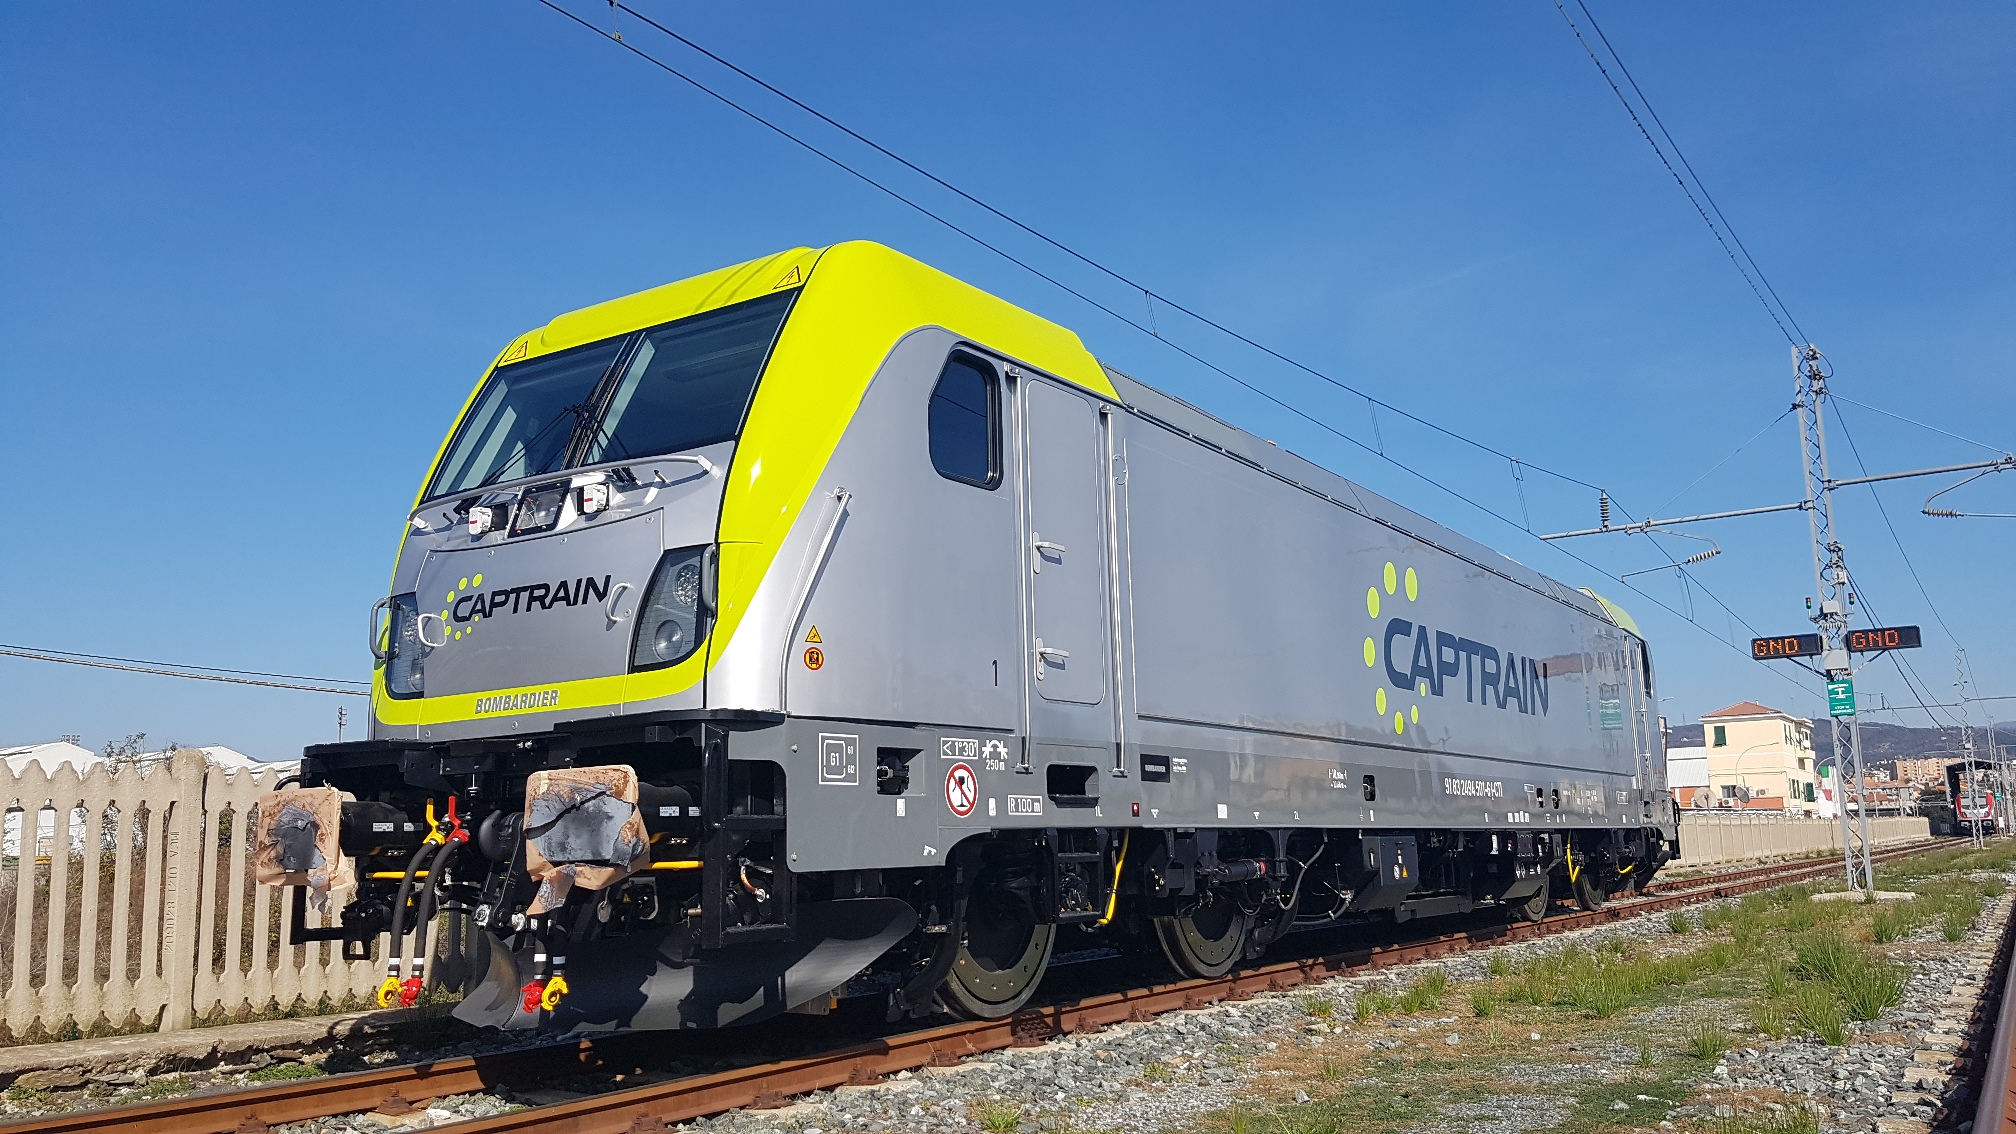 Trasporto merci ferroviario, Captrain Italia sviluppa la flotta con locomotive innovative Bombardier